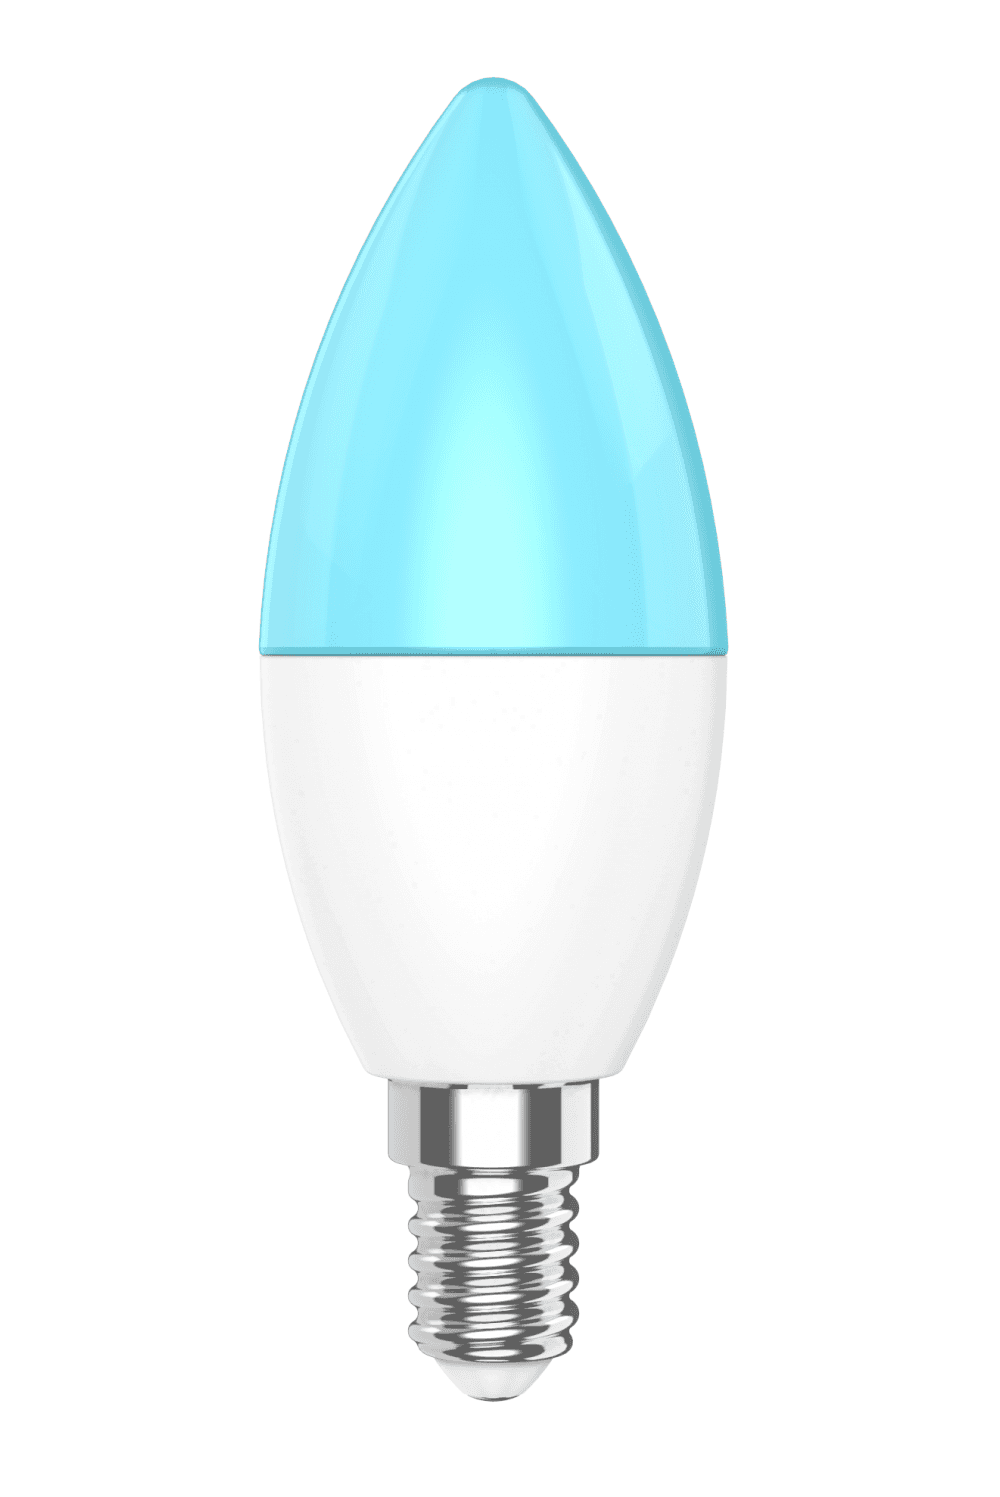 WOOX R9075 E14 5W Wi-Fi Smart LED Bulb RGB & CCT